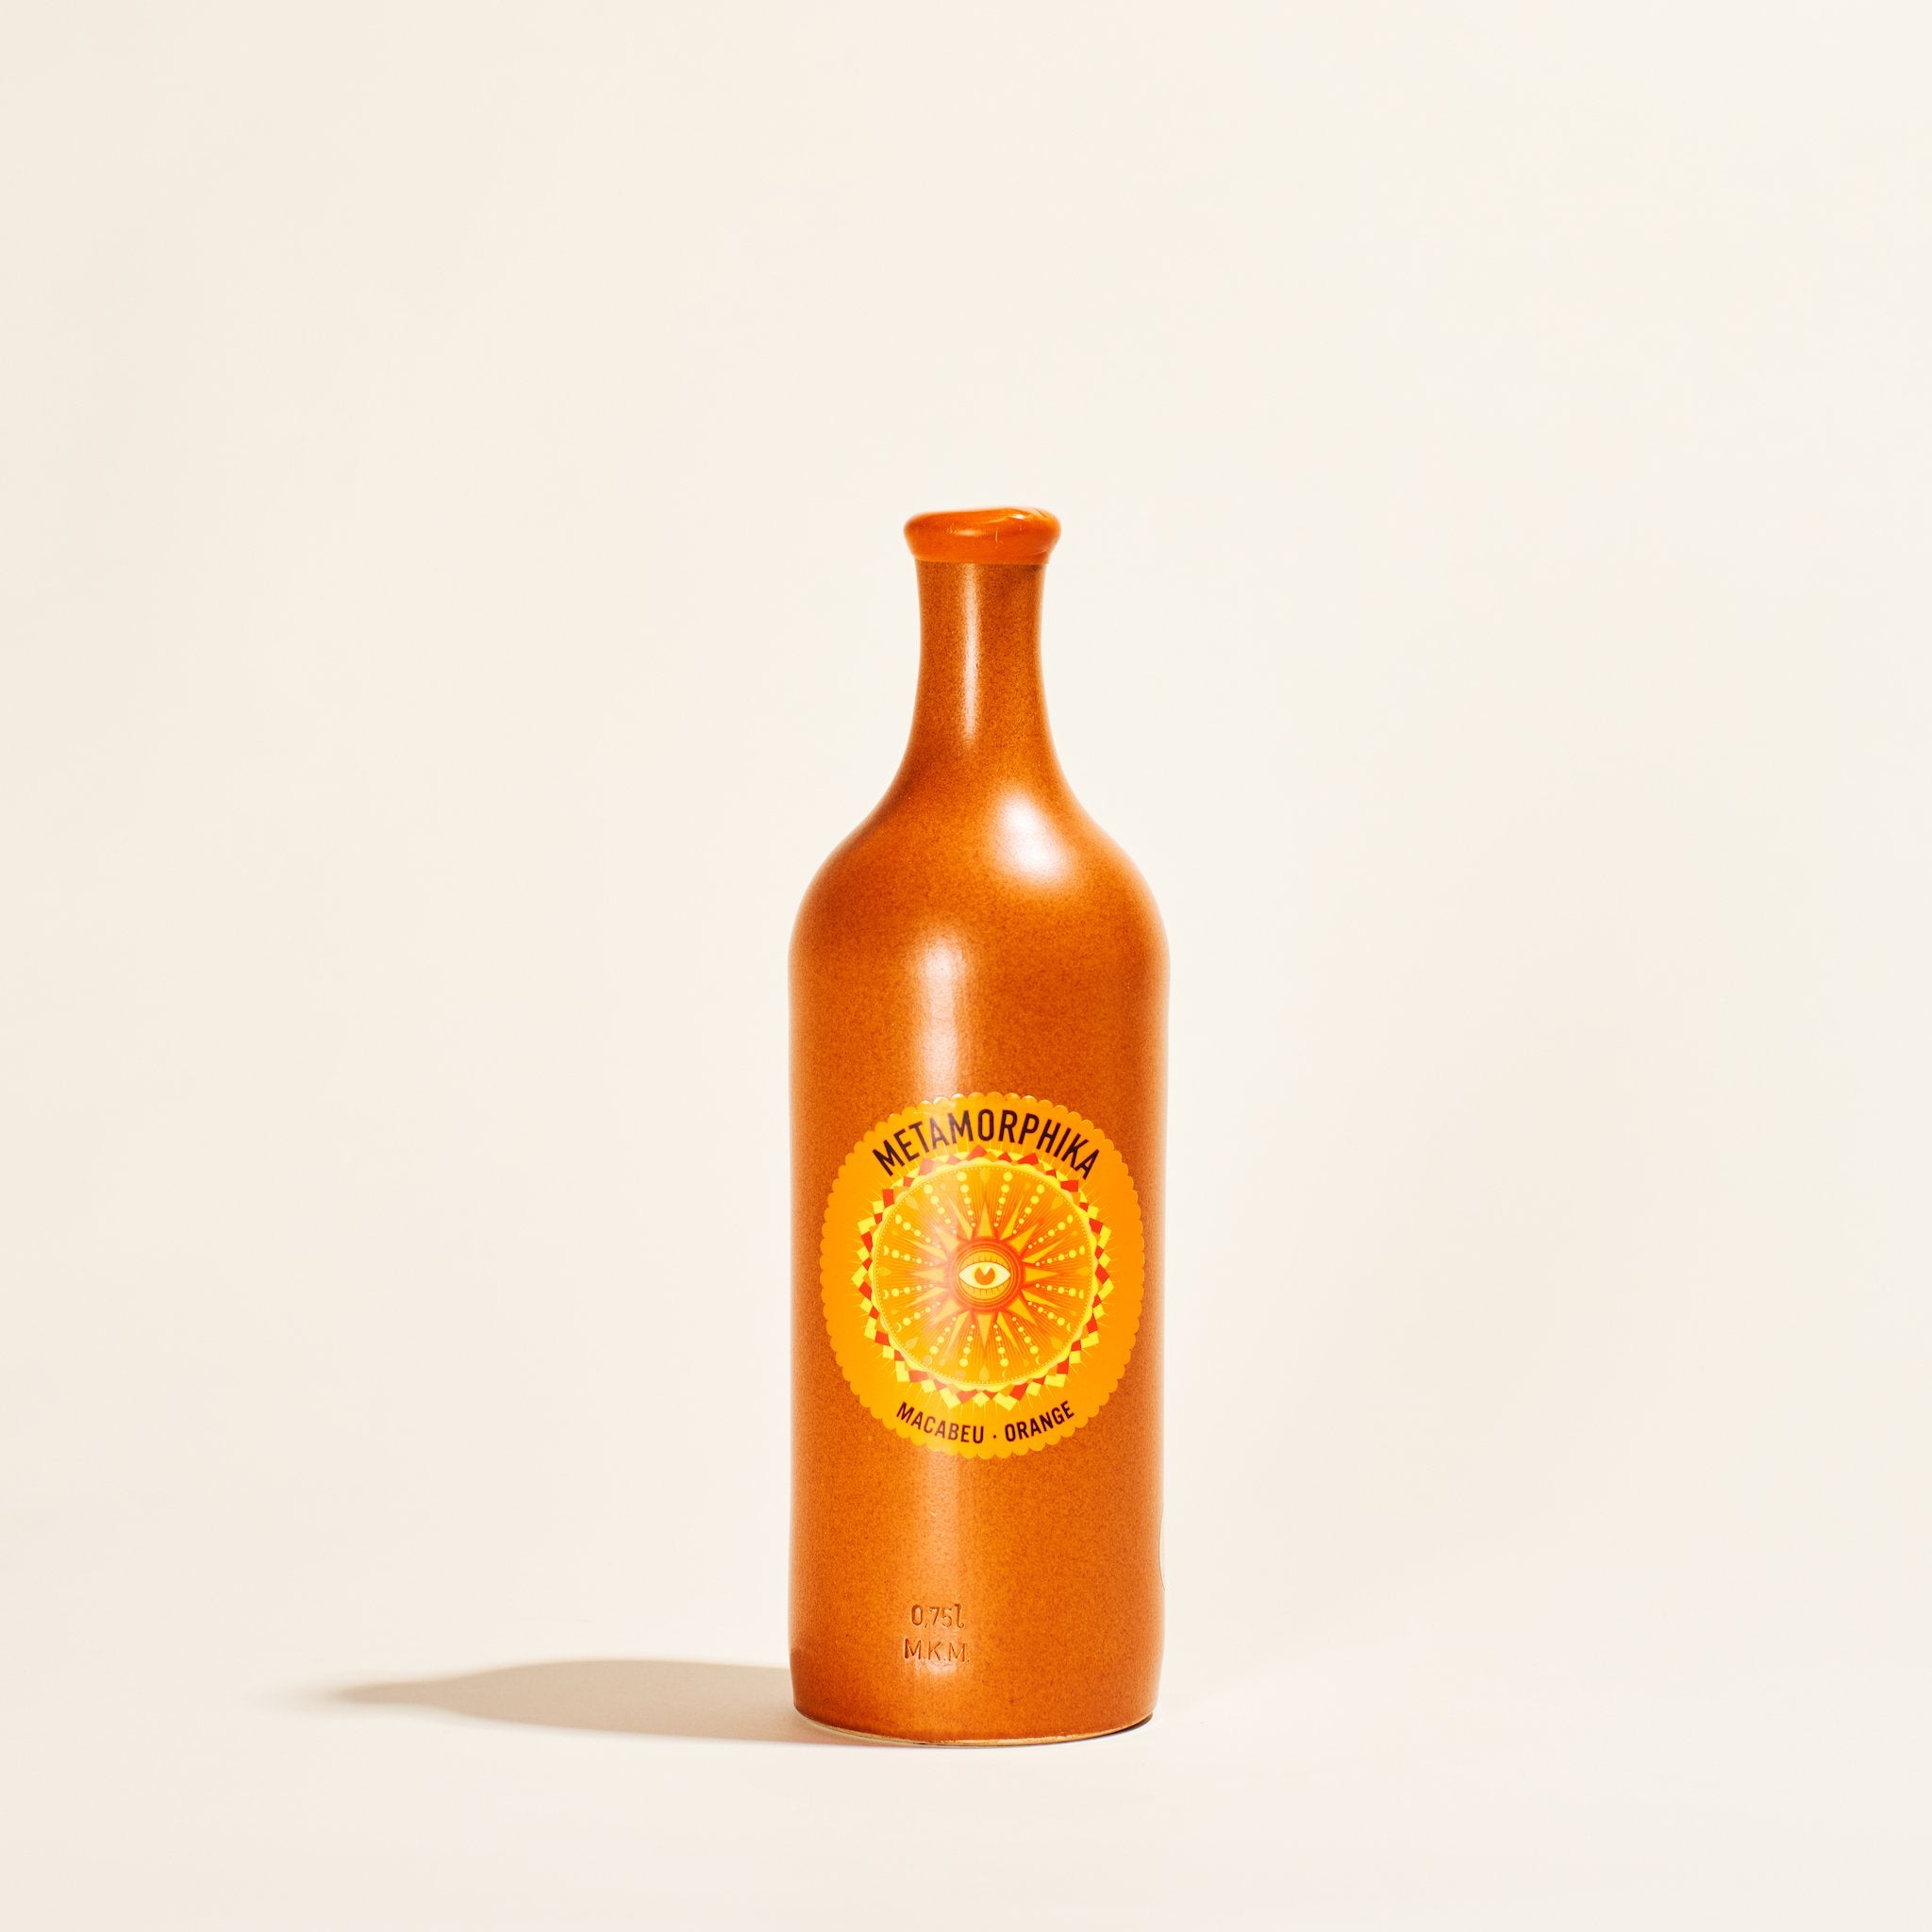 Metamorphika Macabeu Orange | Costador | MYSA Natural Wine